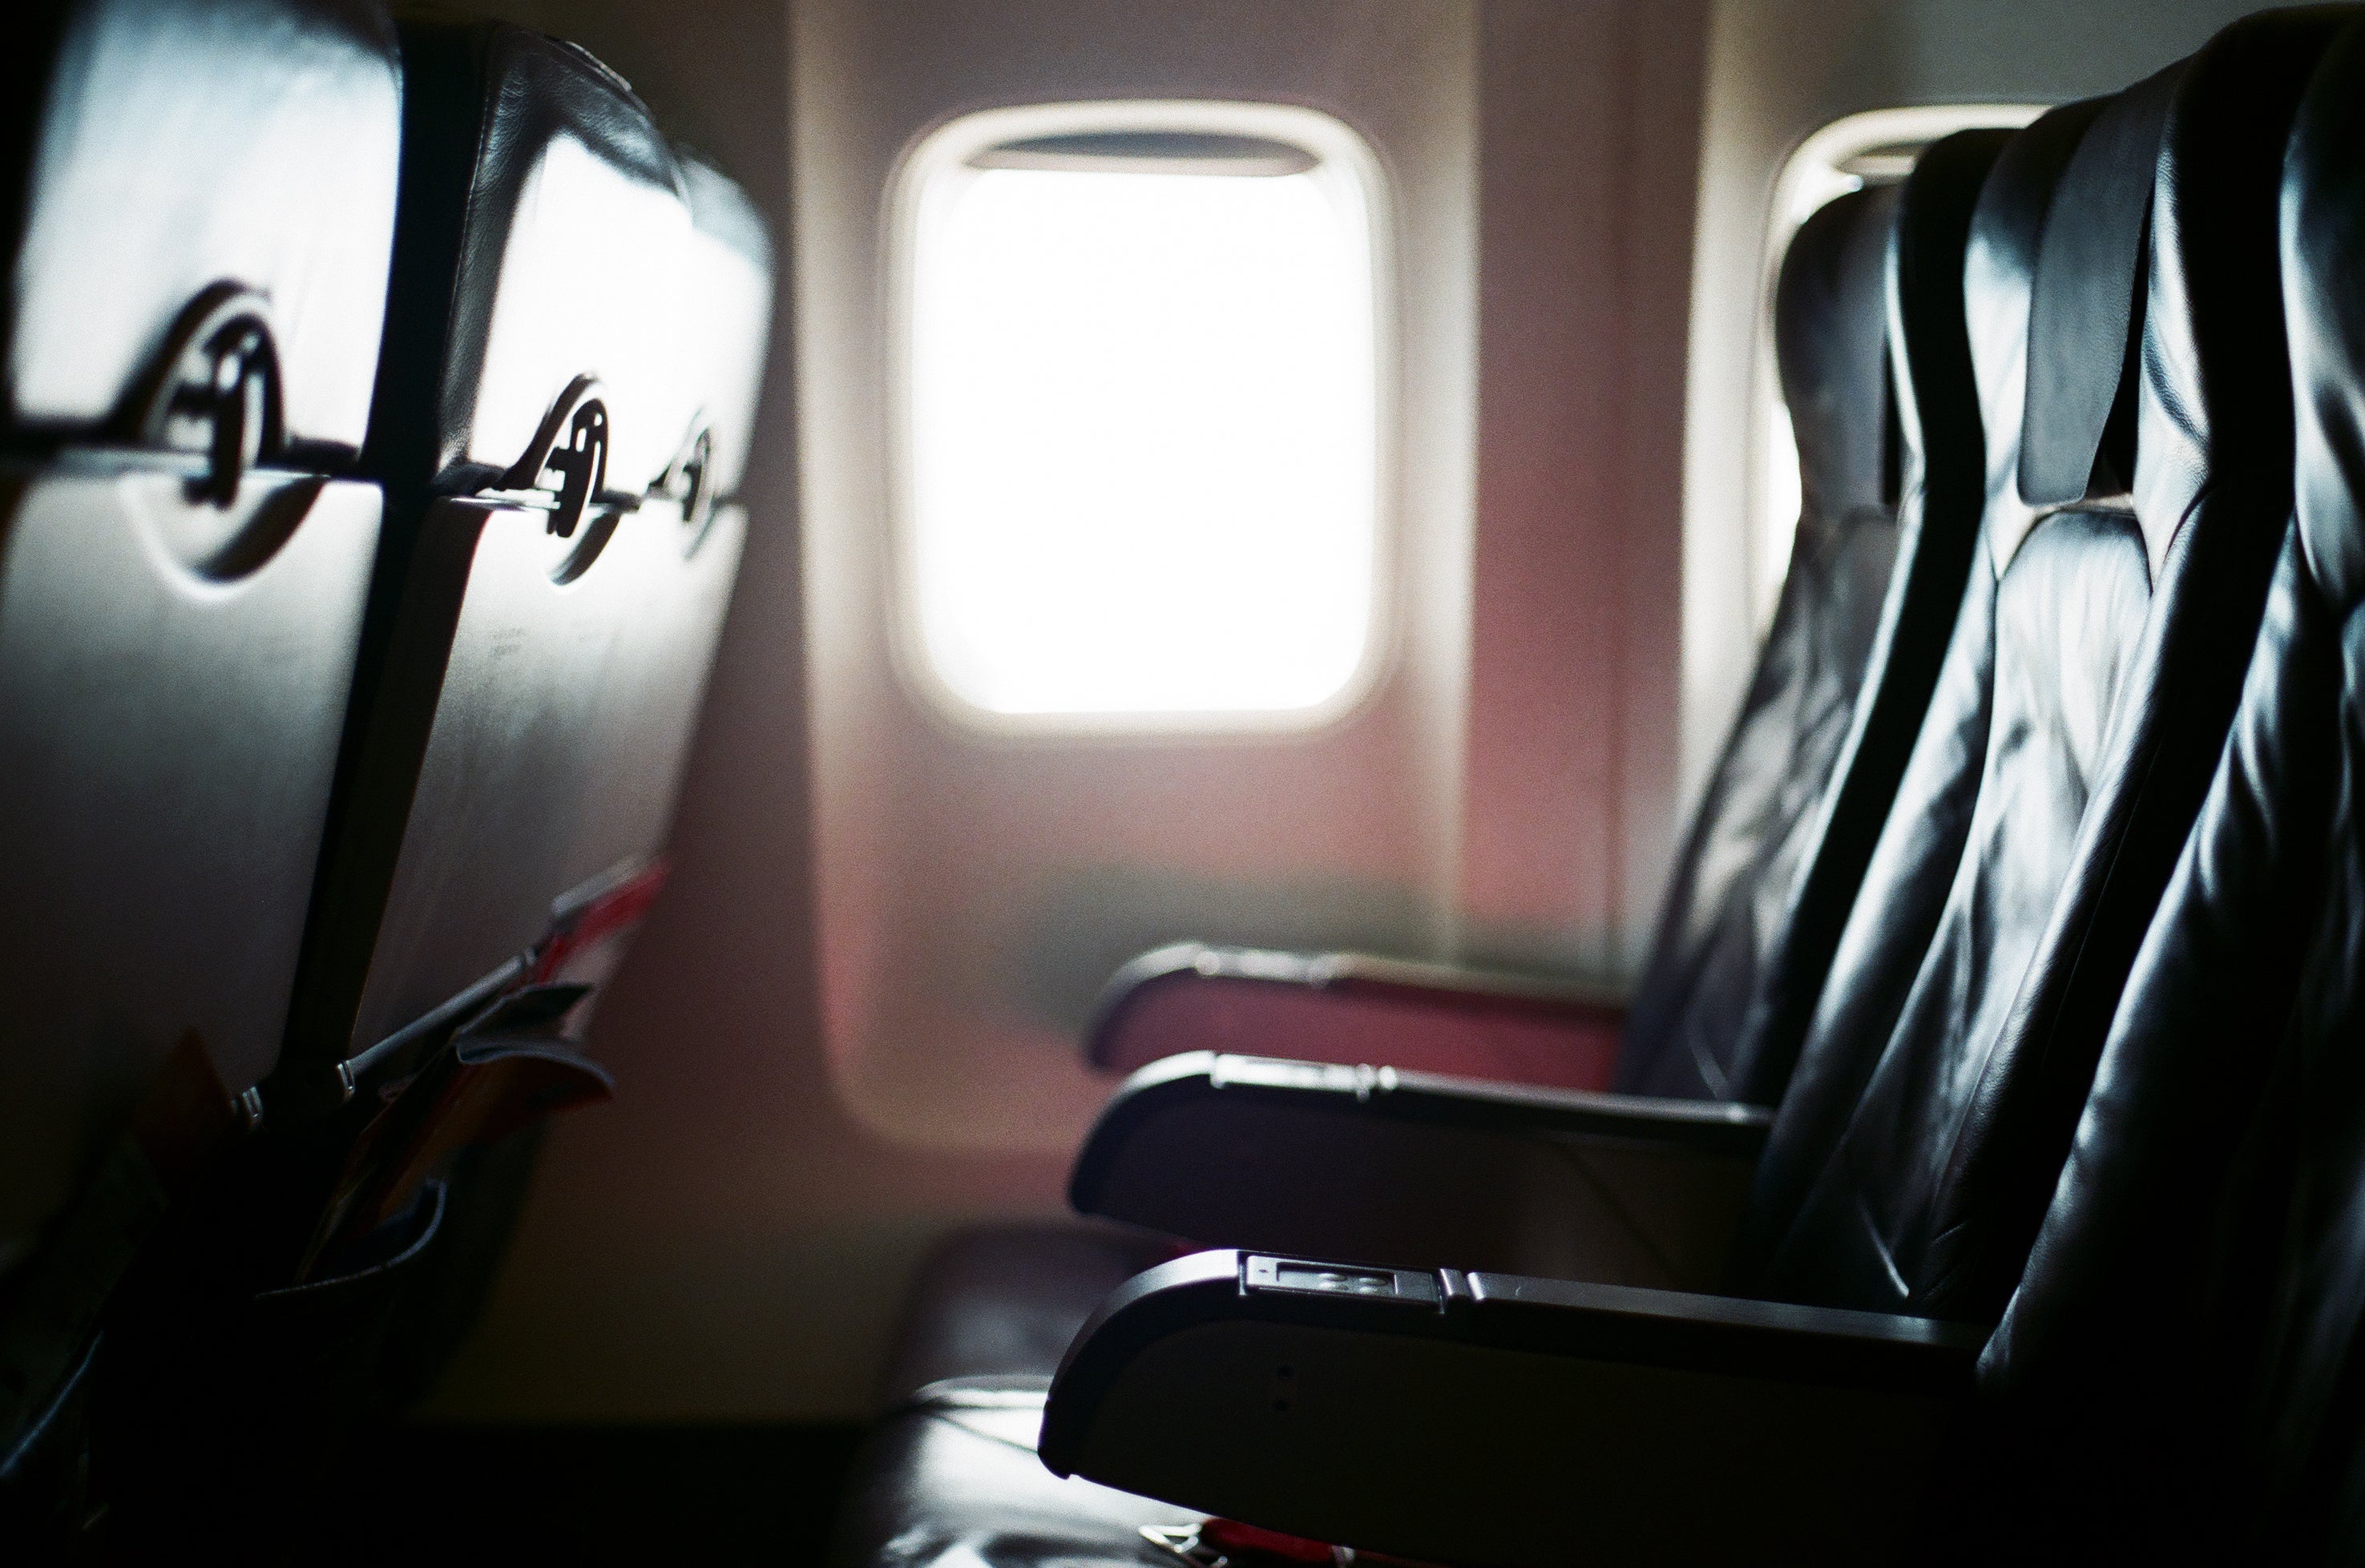 Interior Of Airplane